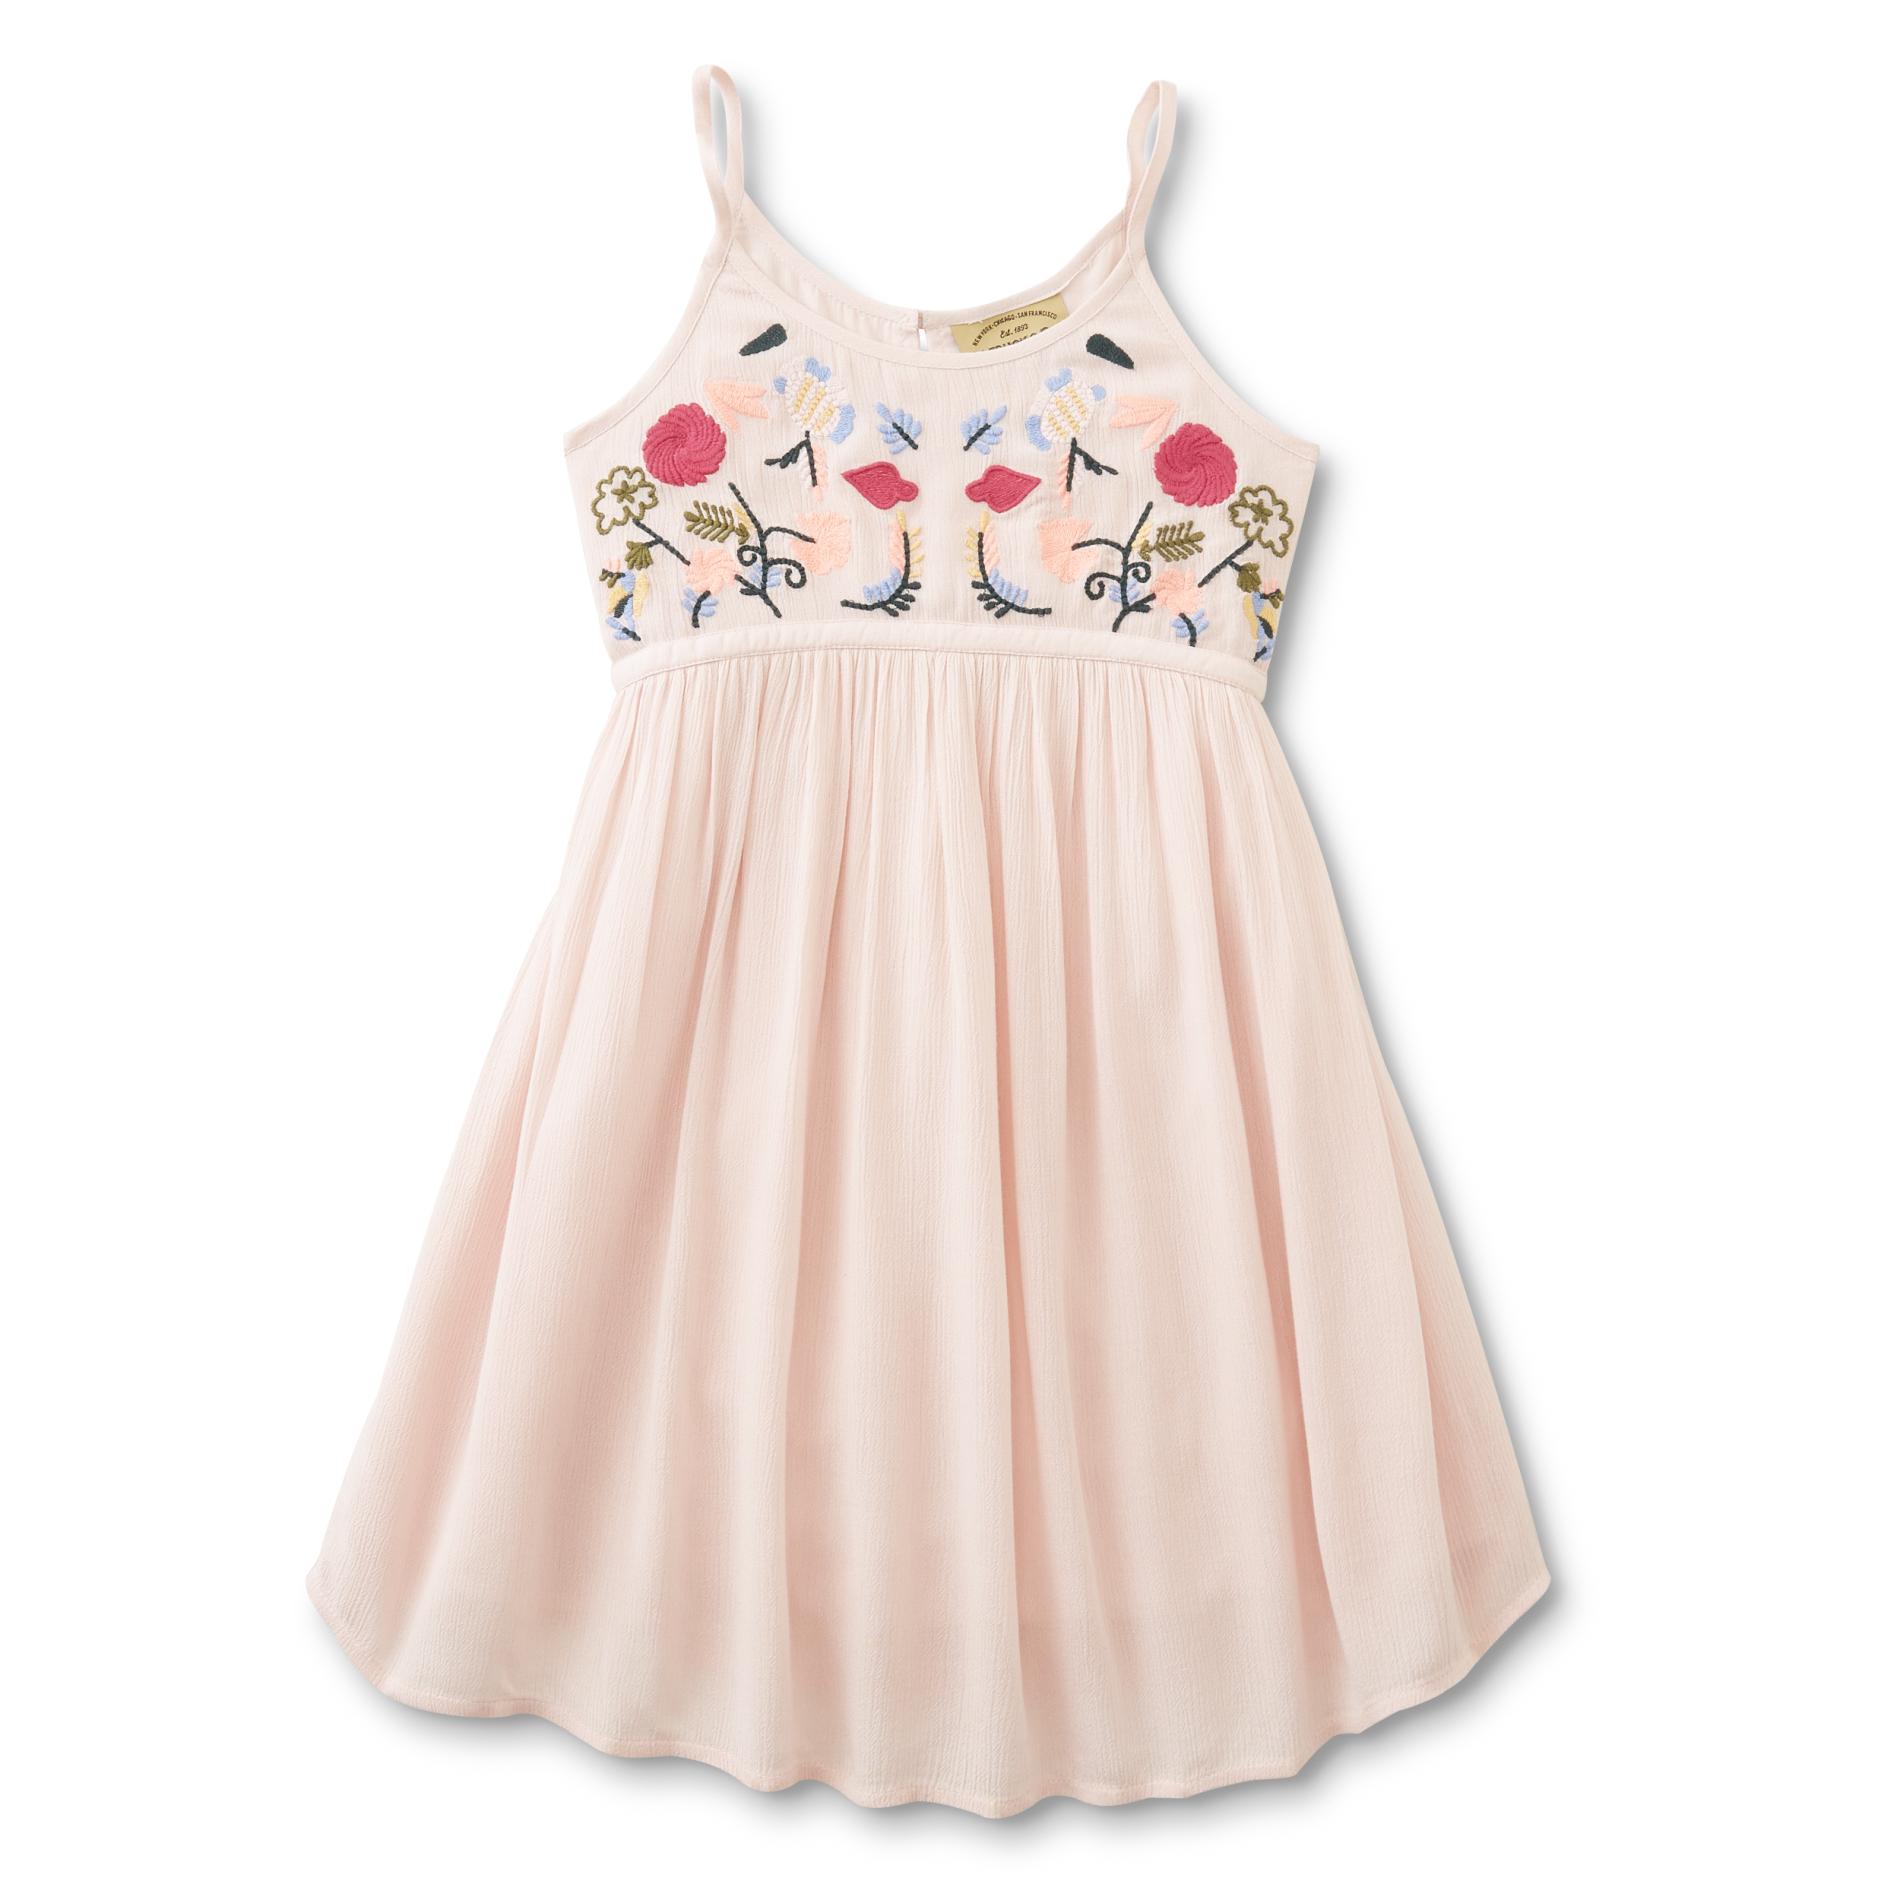 Roebuck & Co. Girls' Tank Dress - Floral